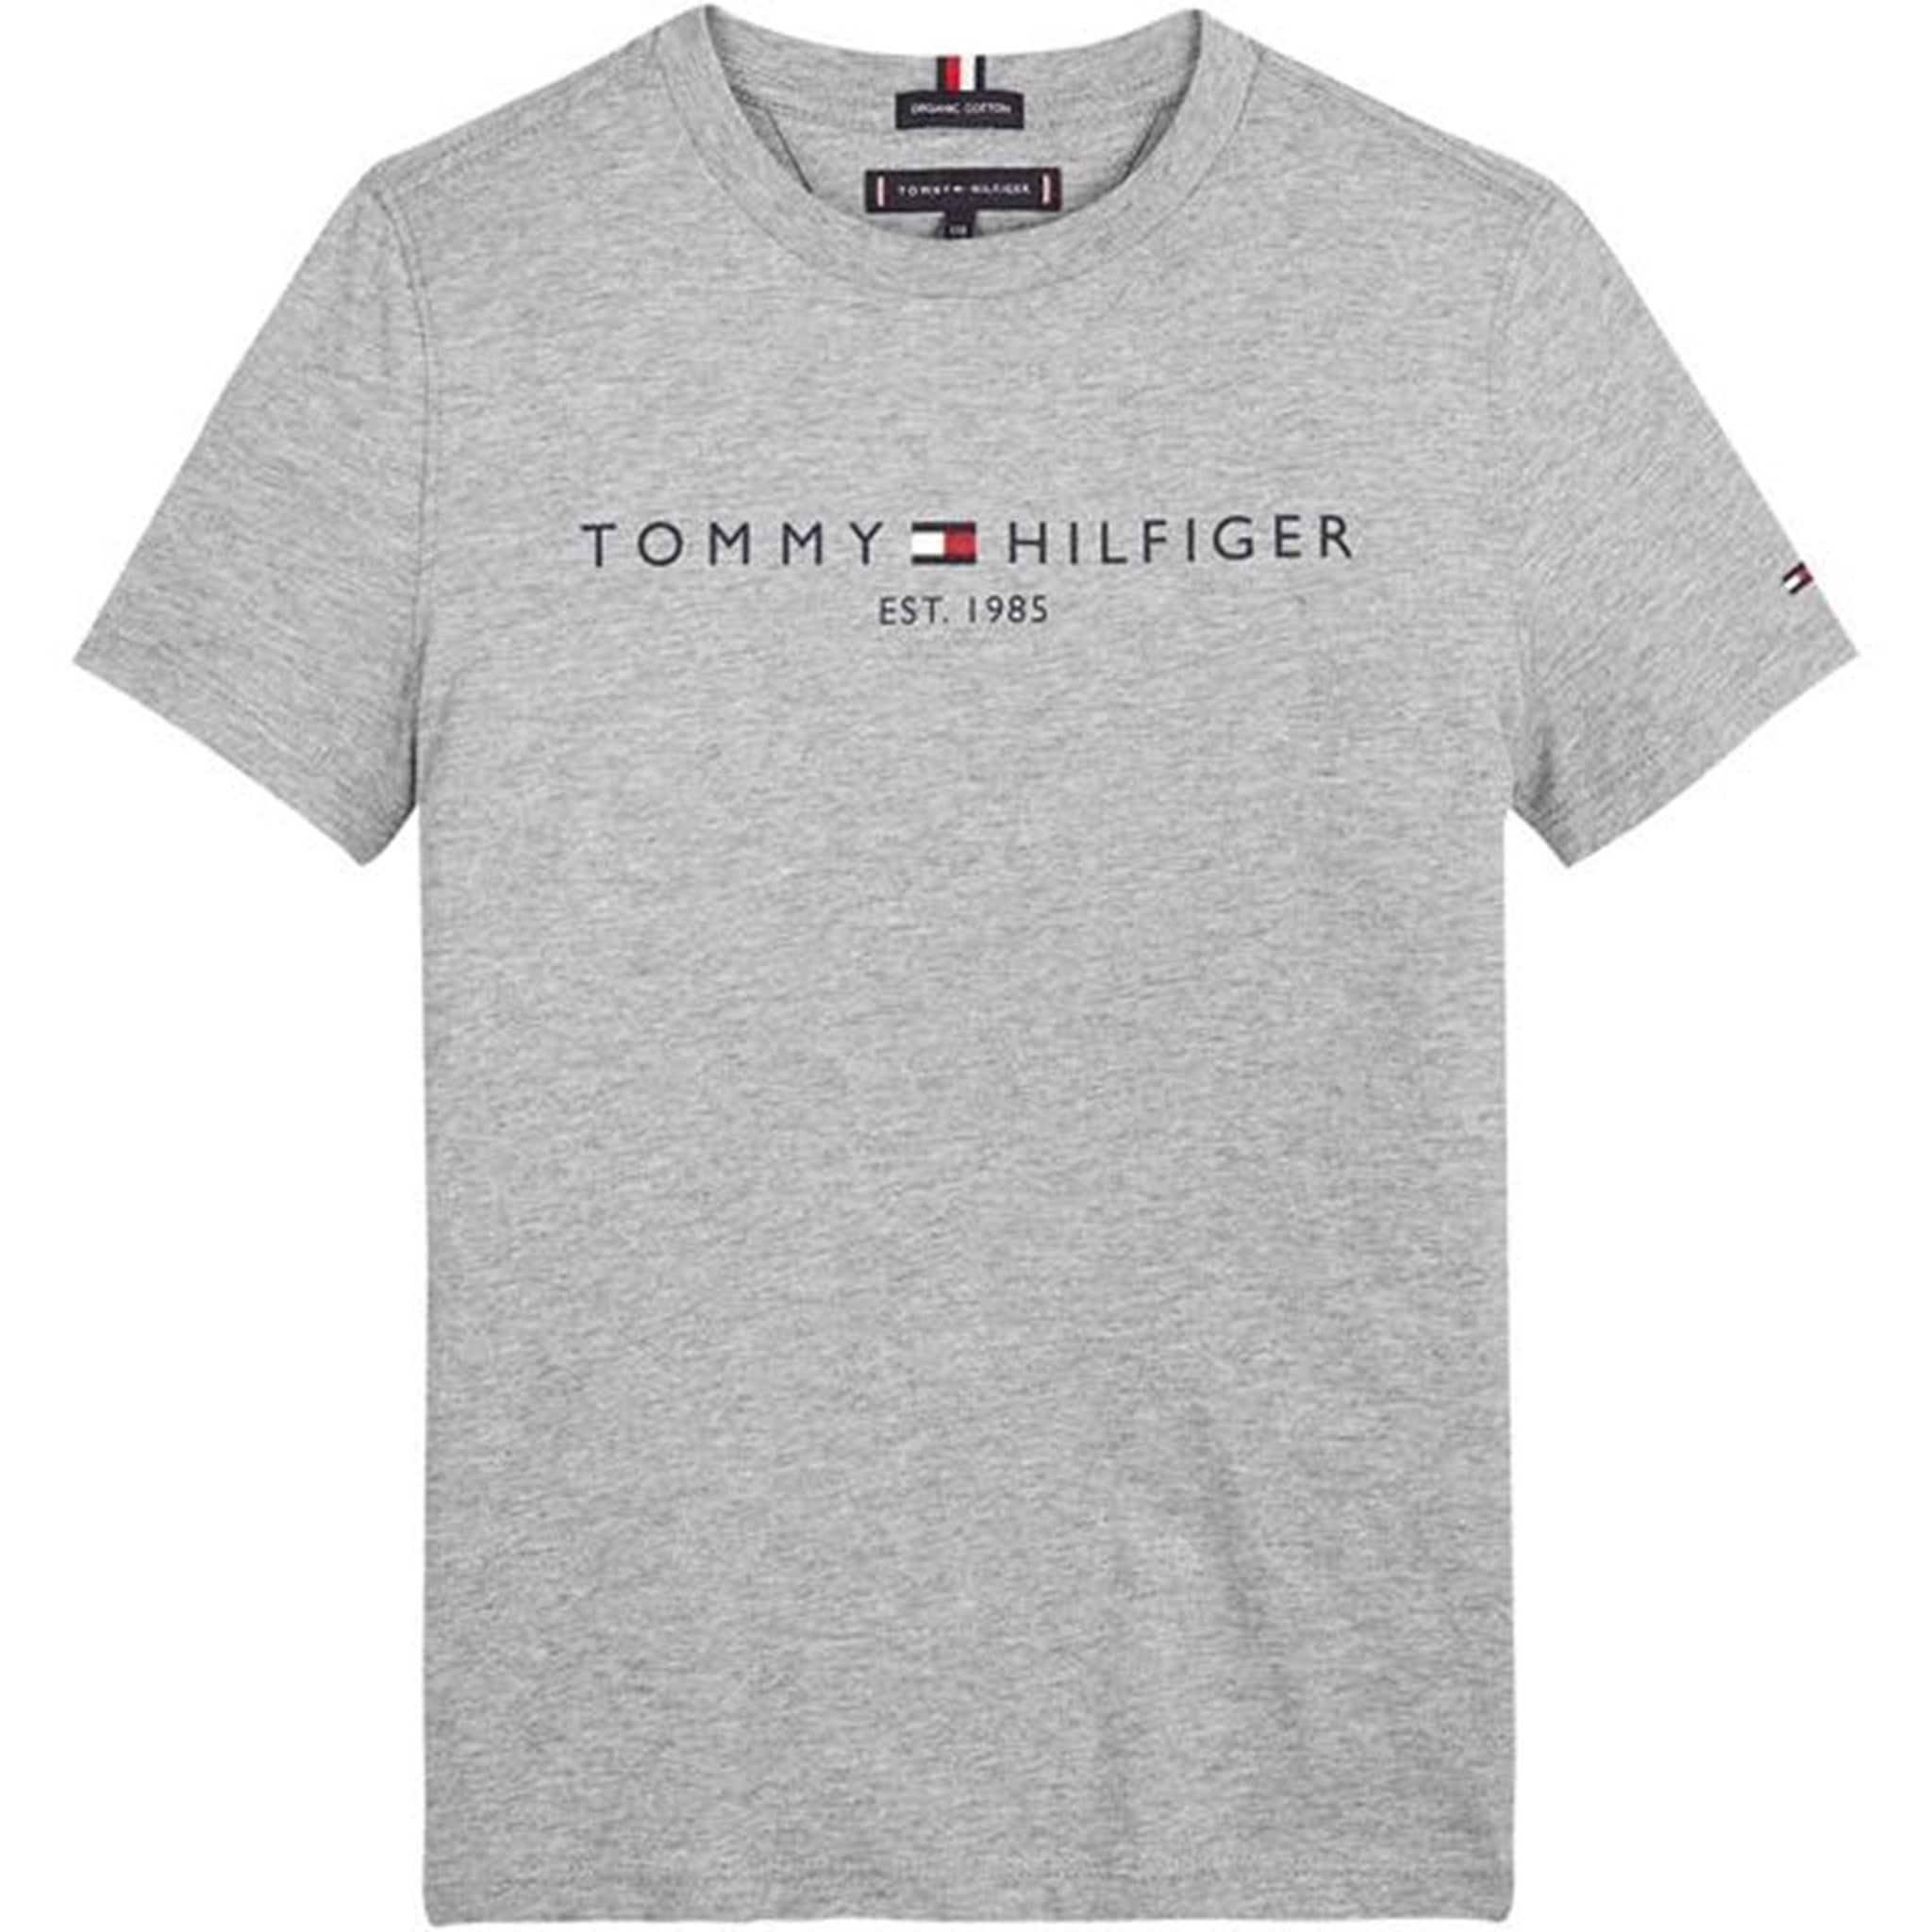 Tommy Hilfiger Essential T-shirt Light Grey Heather